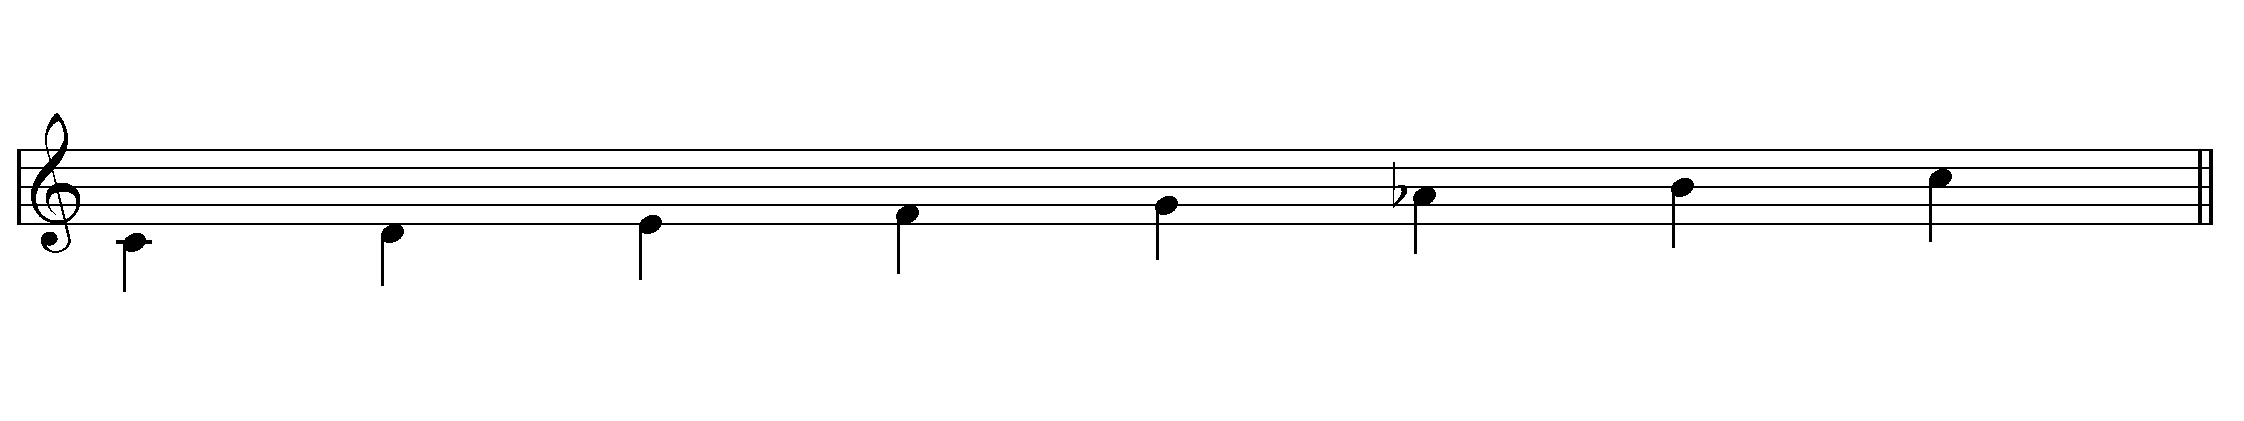 Harmonic Major Scale